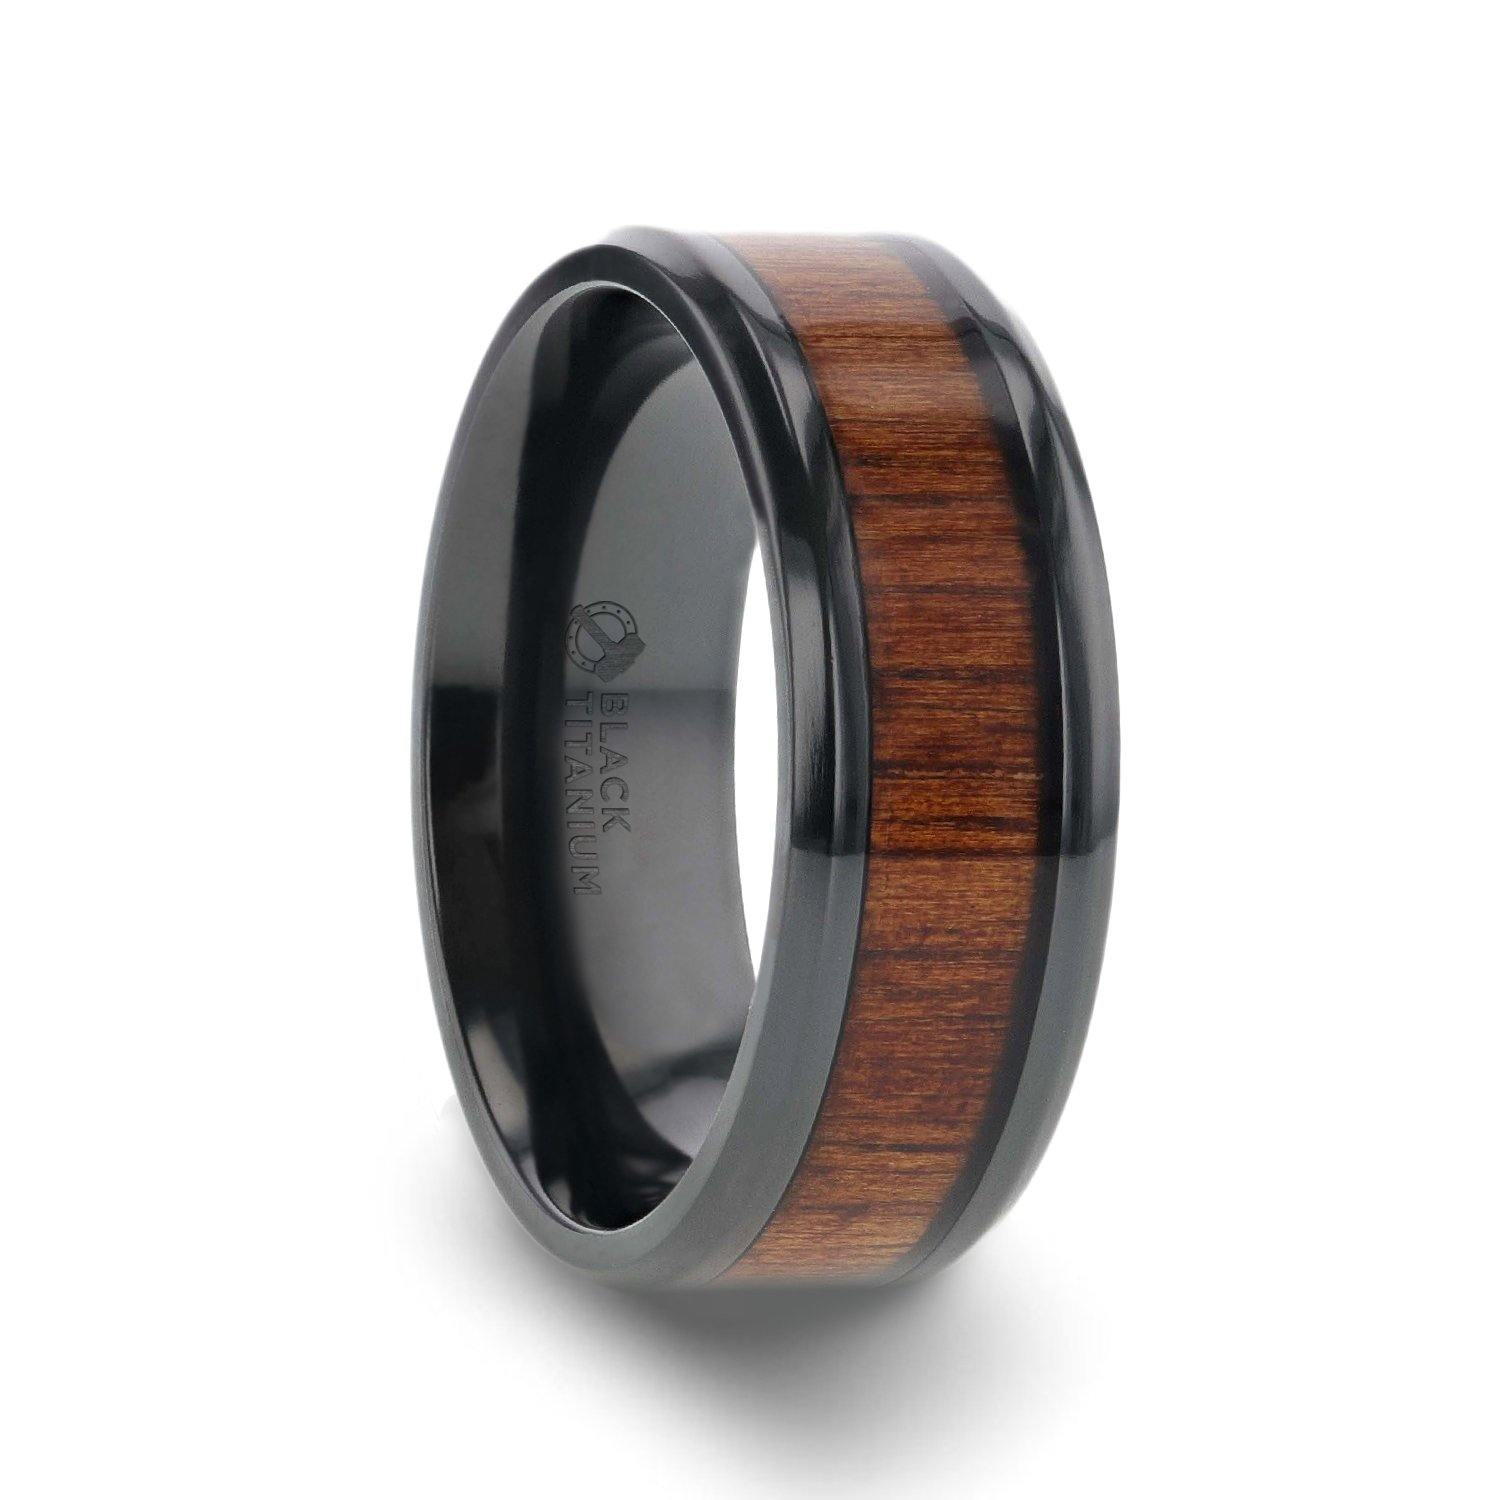 LEIFI - Koa Wood Inlaid Black Titanium Ring with Bevels - 8 mm - The Rutile Ltd